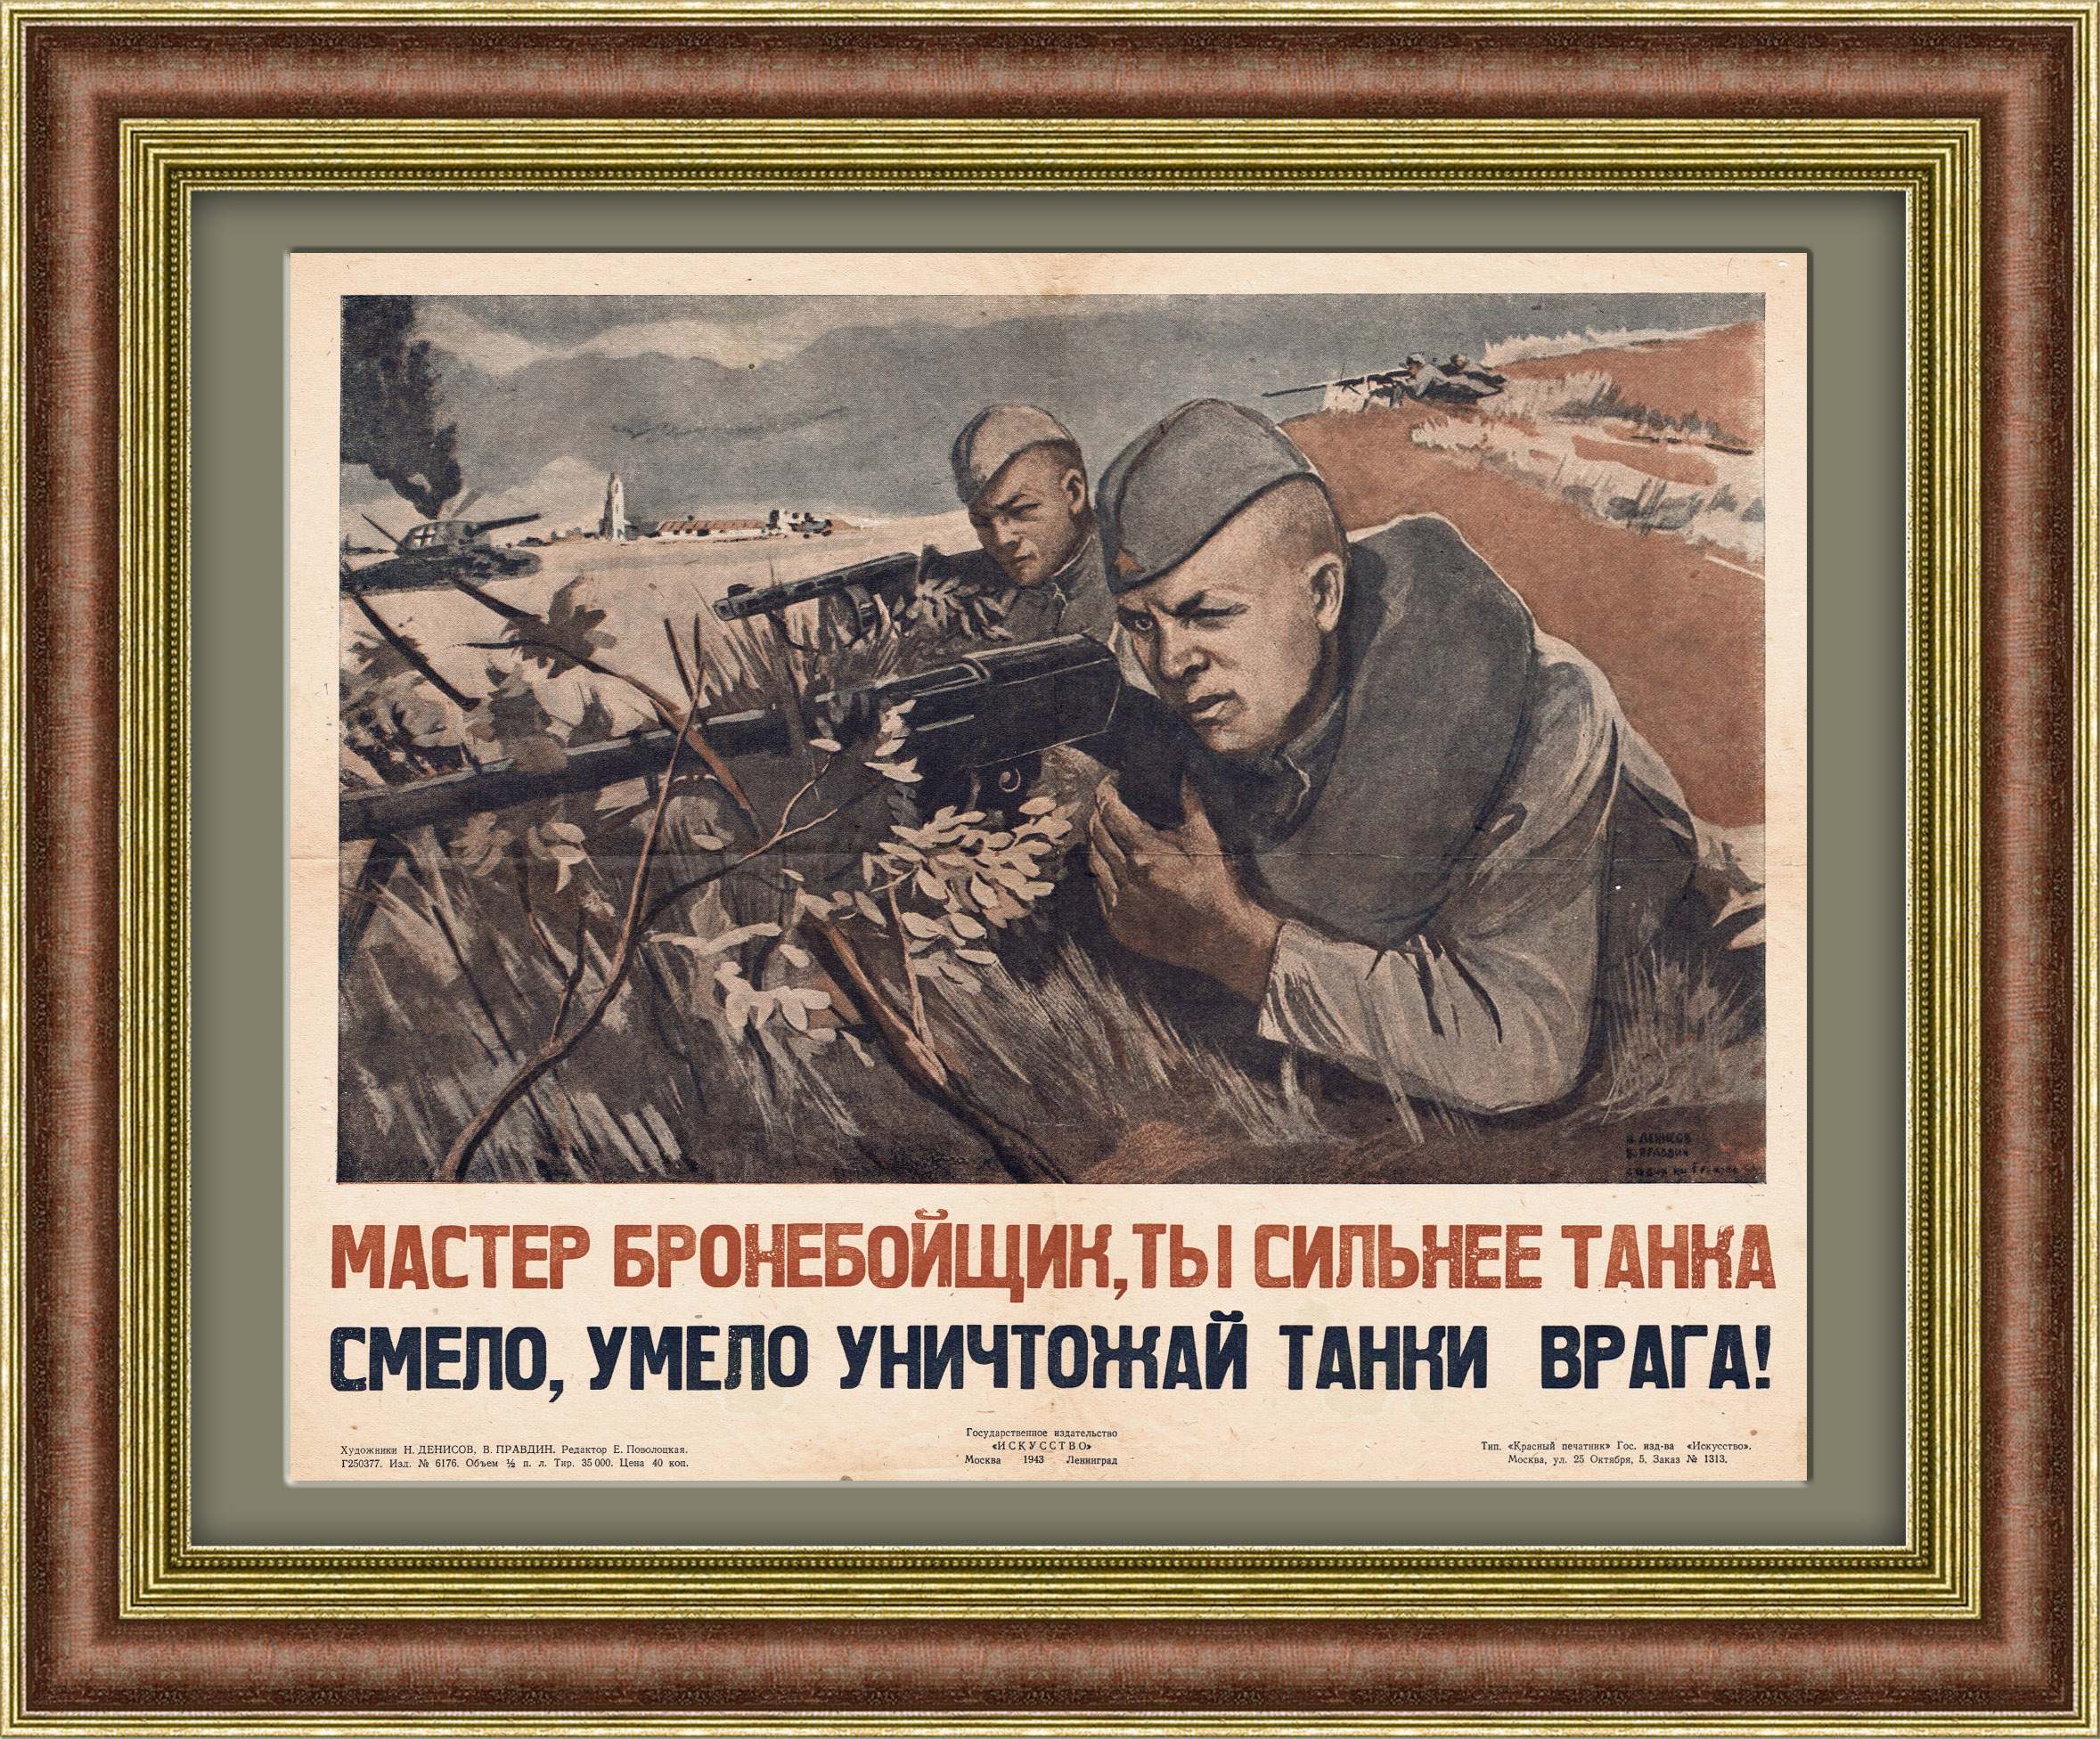 Цели задачи плакатов. Советские плакаты. Плакат 1943. Советские плакаты юмористические. Советские мирные плакаты.